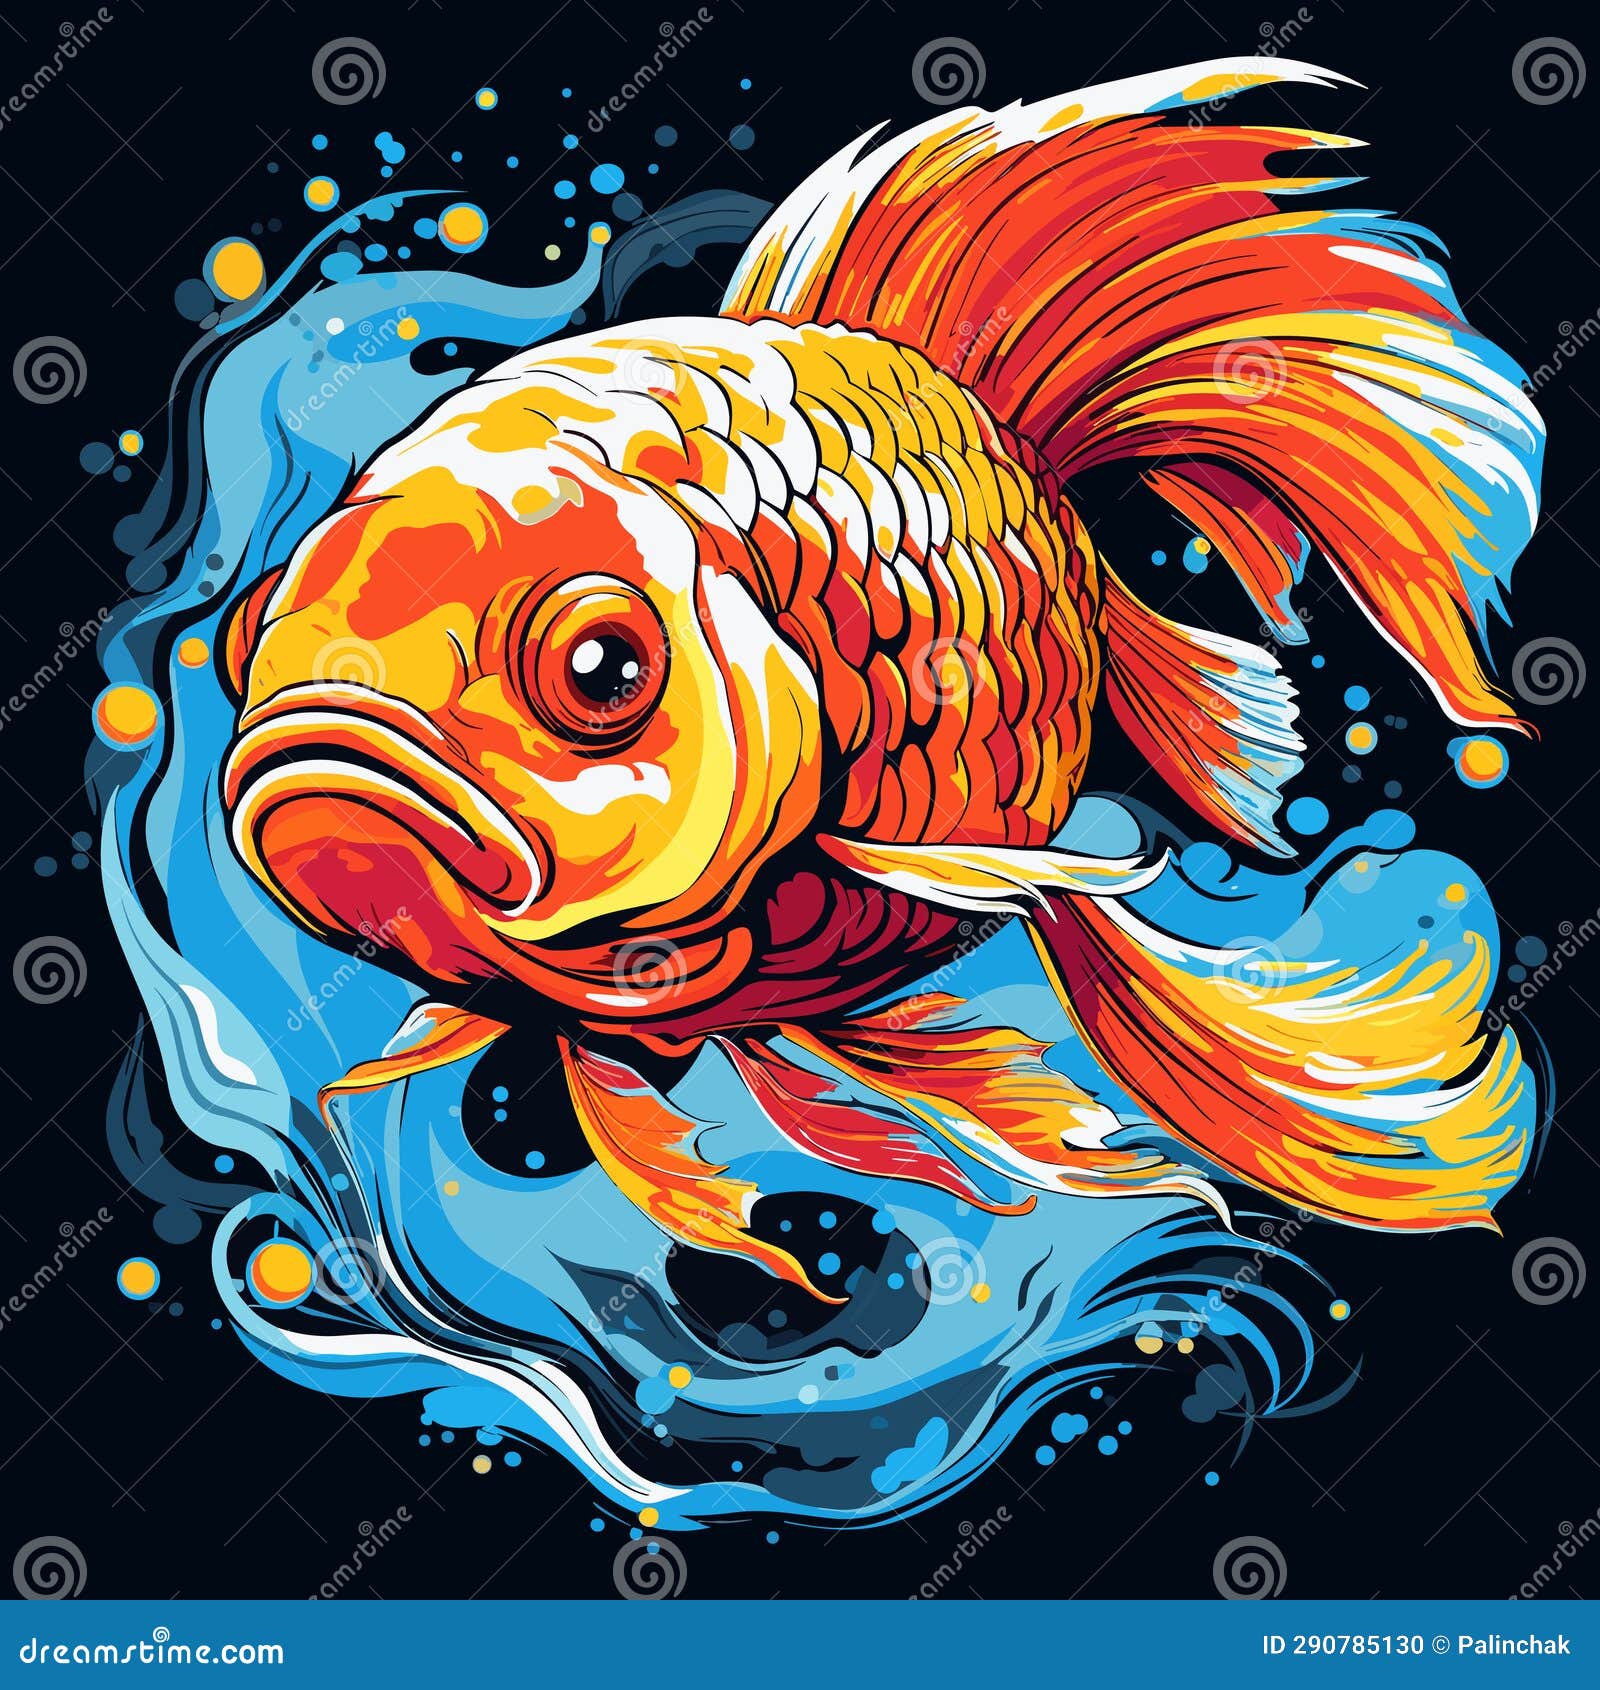 368 Koi Fish Vector Art Stock Photos - Free & Royalty-Free Stock Photos  from Dreamstime